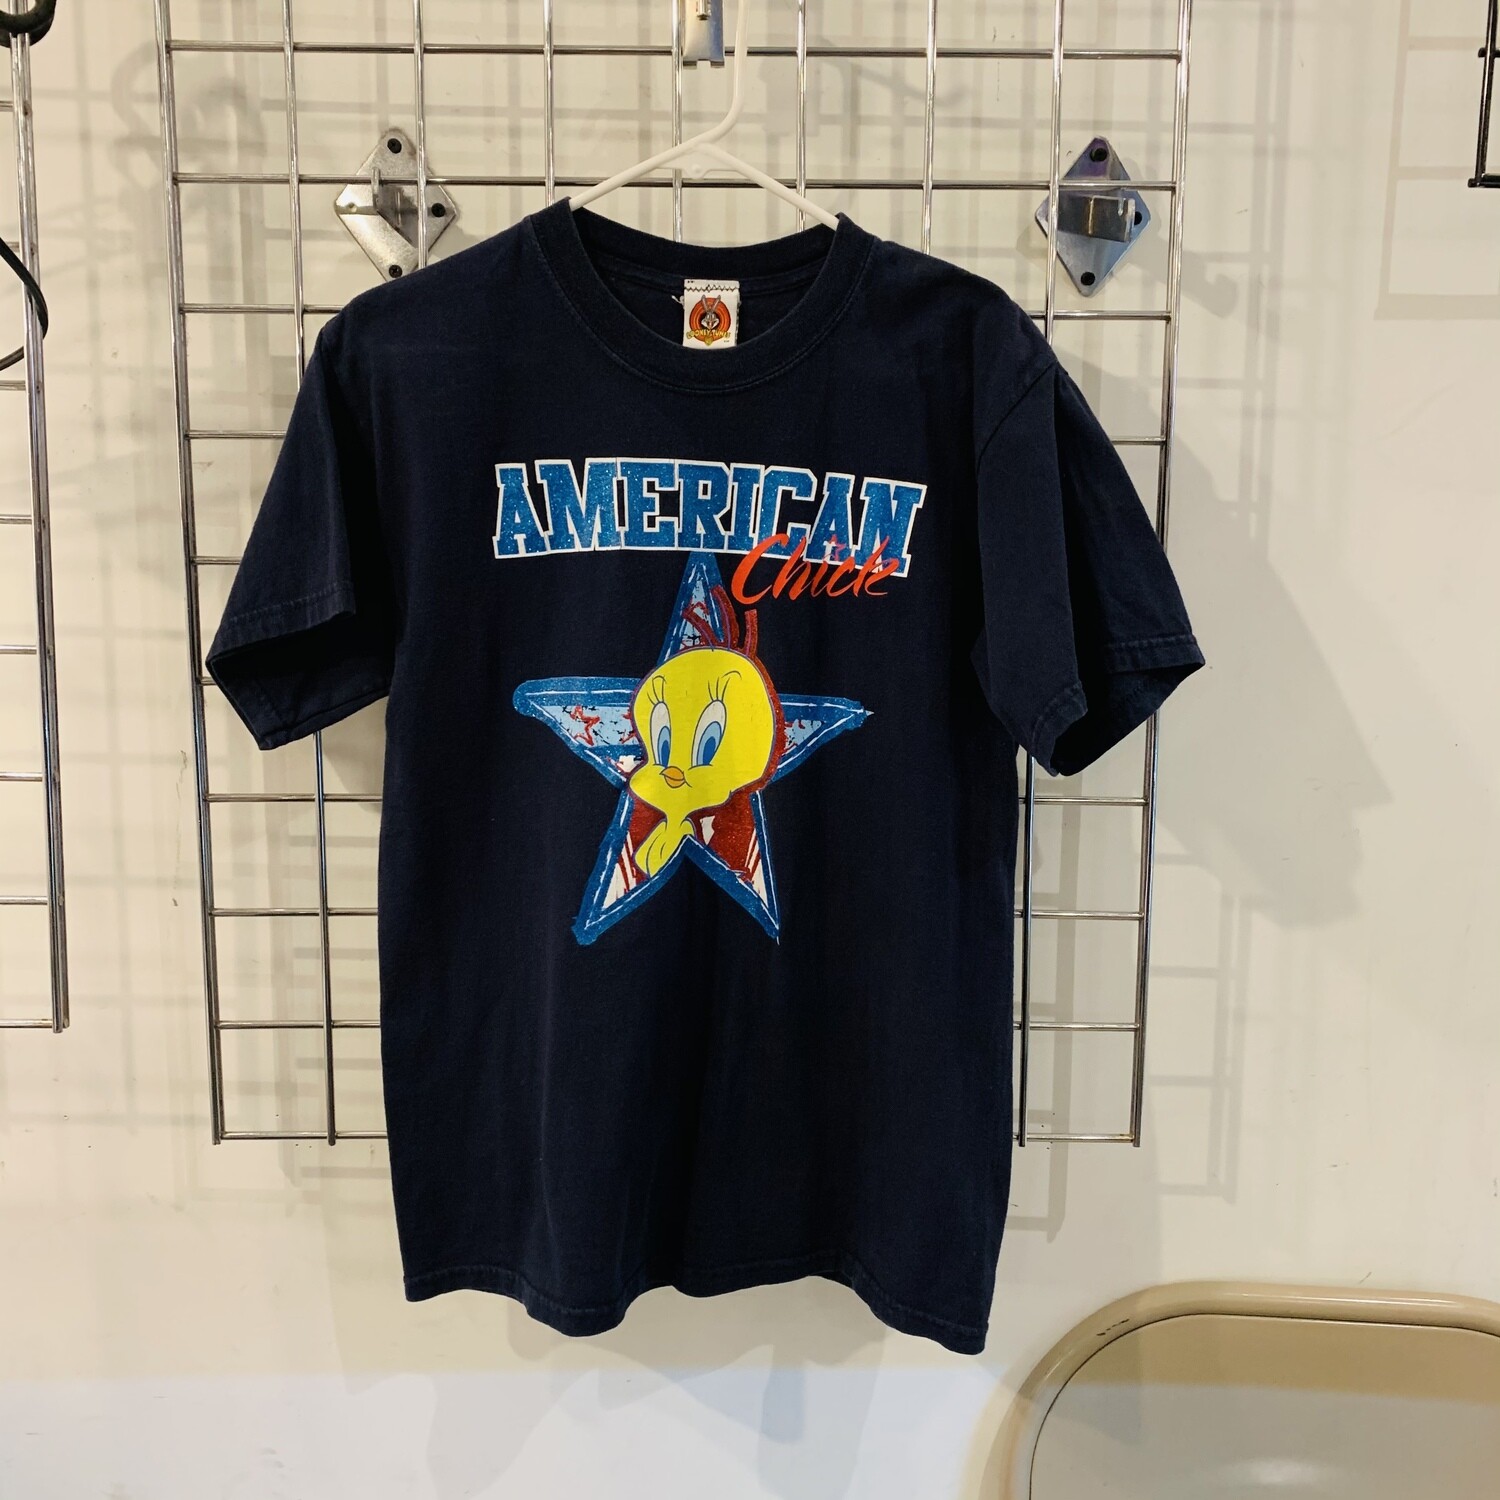 Size Medium Looney Tunes "American Chick" T-Shirt Navy